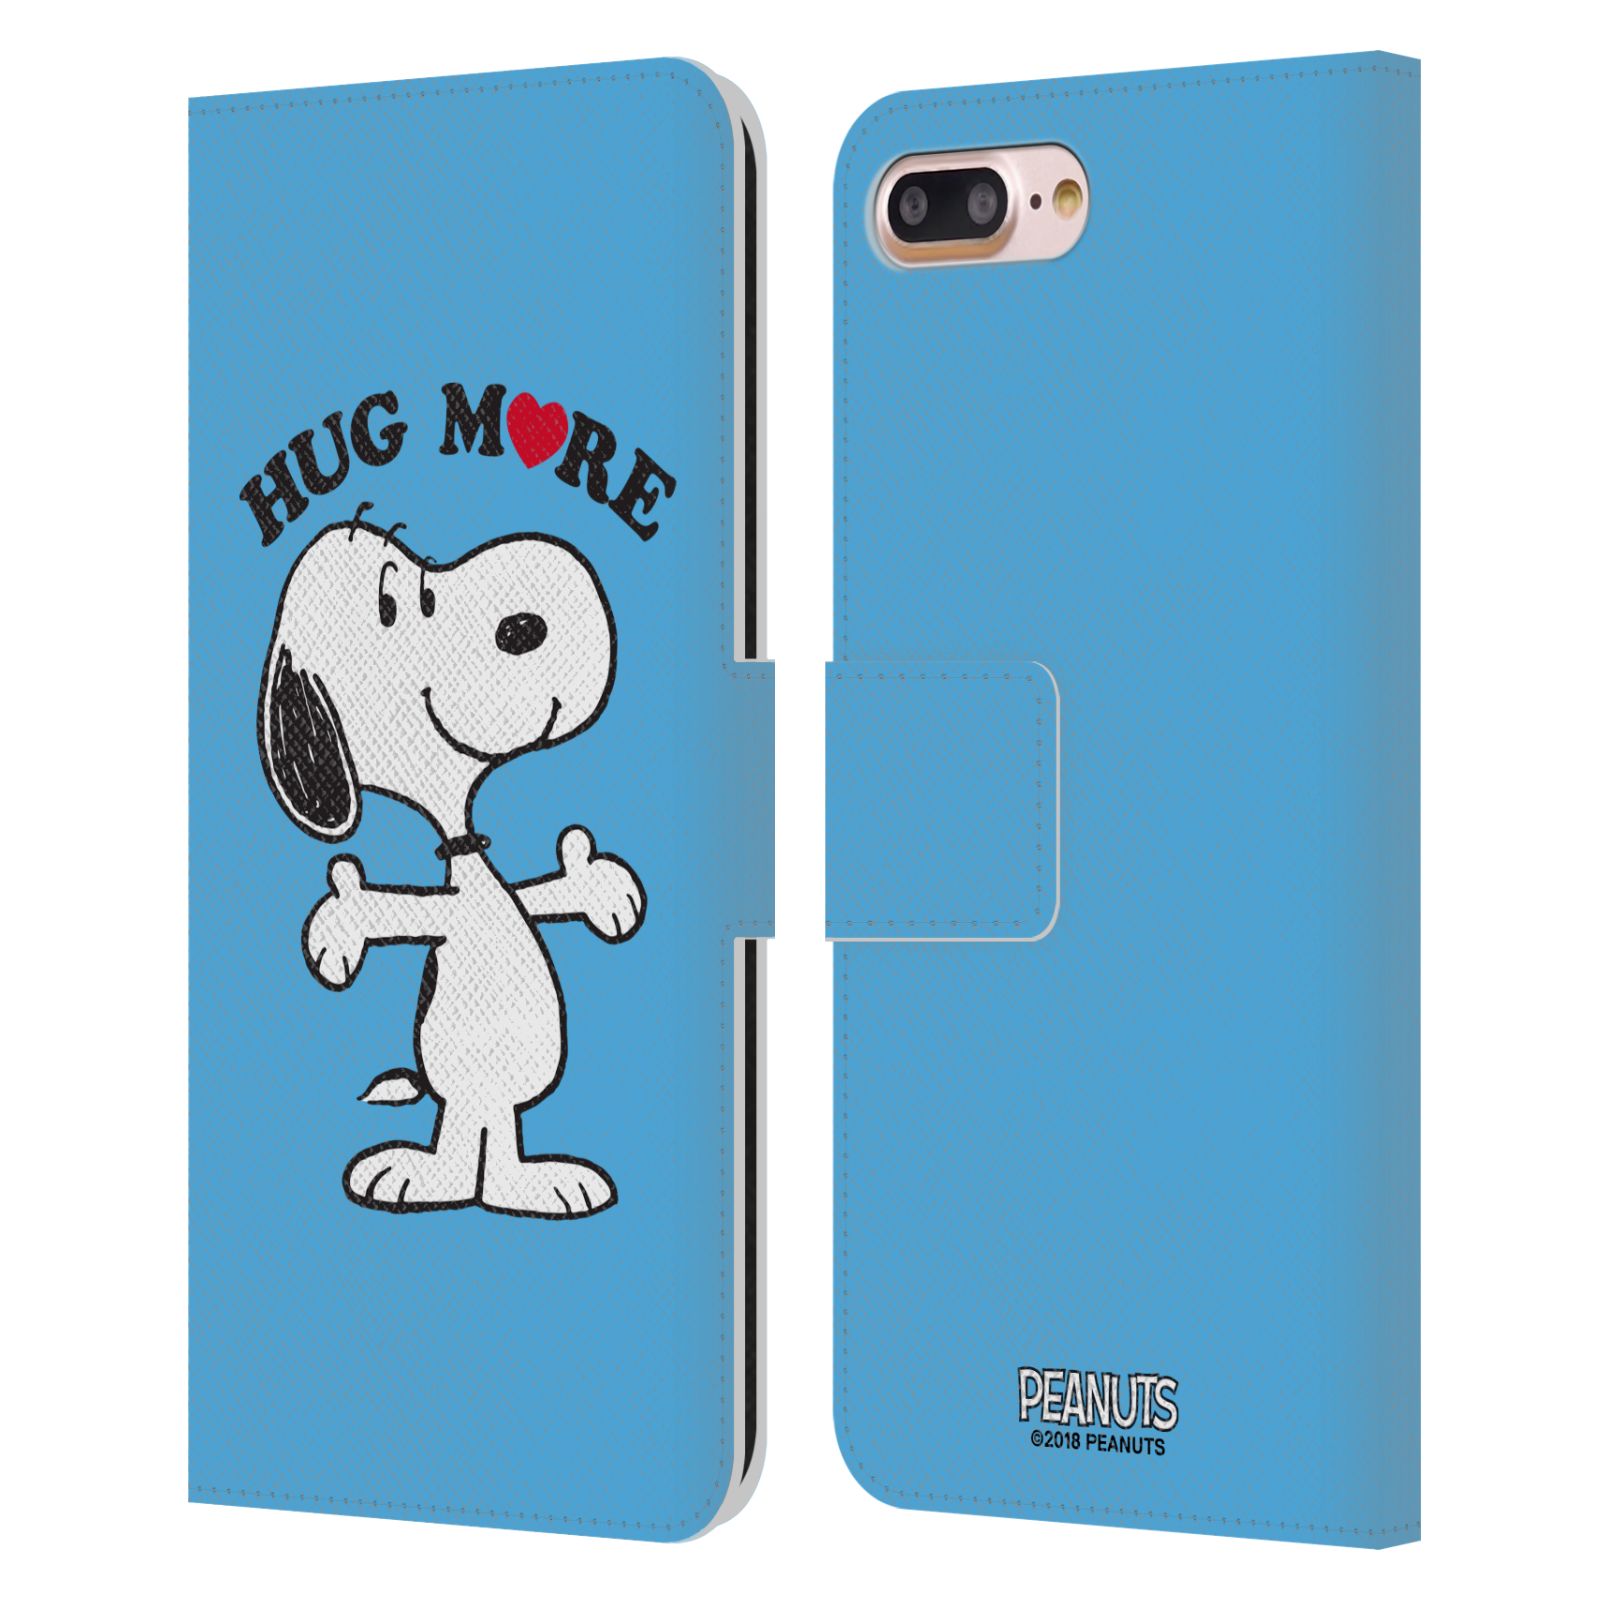 Pouzdro na mobil Apple Iphone 7 Plus / 8 Plus - Head Case - Peanuts - pejsek snoopy světle modré objetí